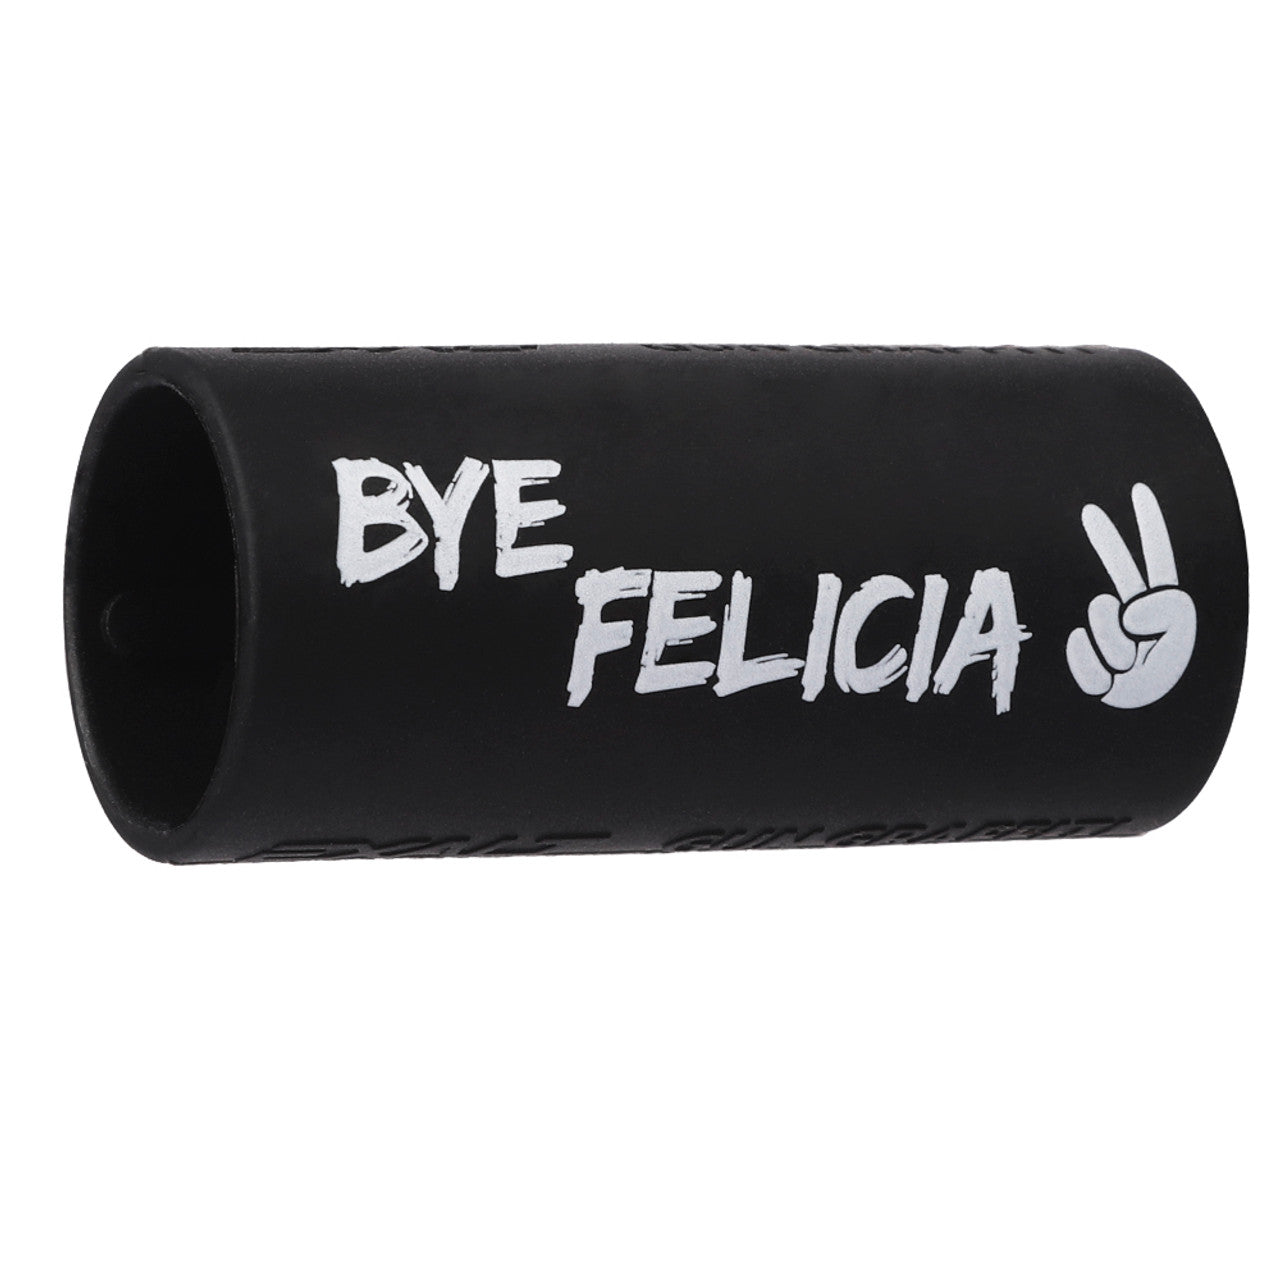 Exalt Gun Graffiti Band - Bye Felicia